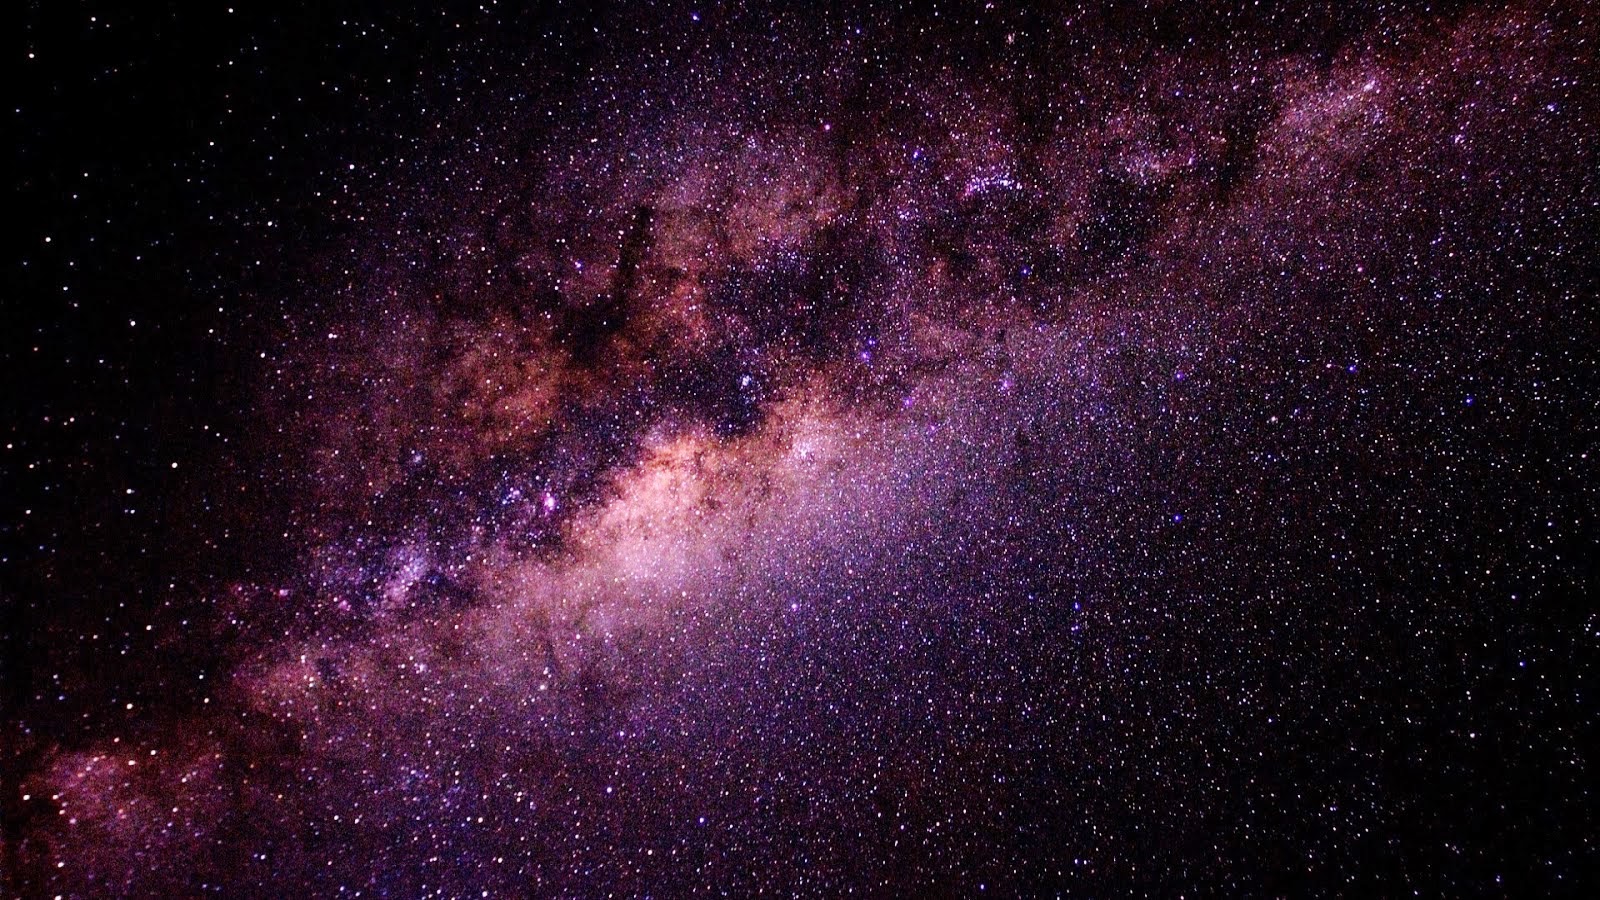 46+] Galaxy Wallpaper 1080p - WallpaperSafari